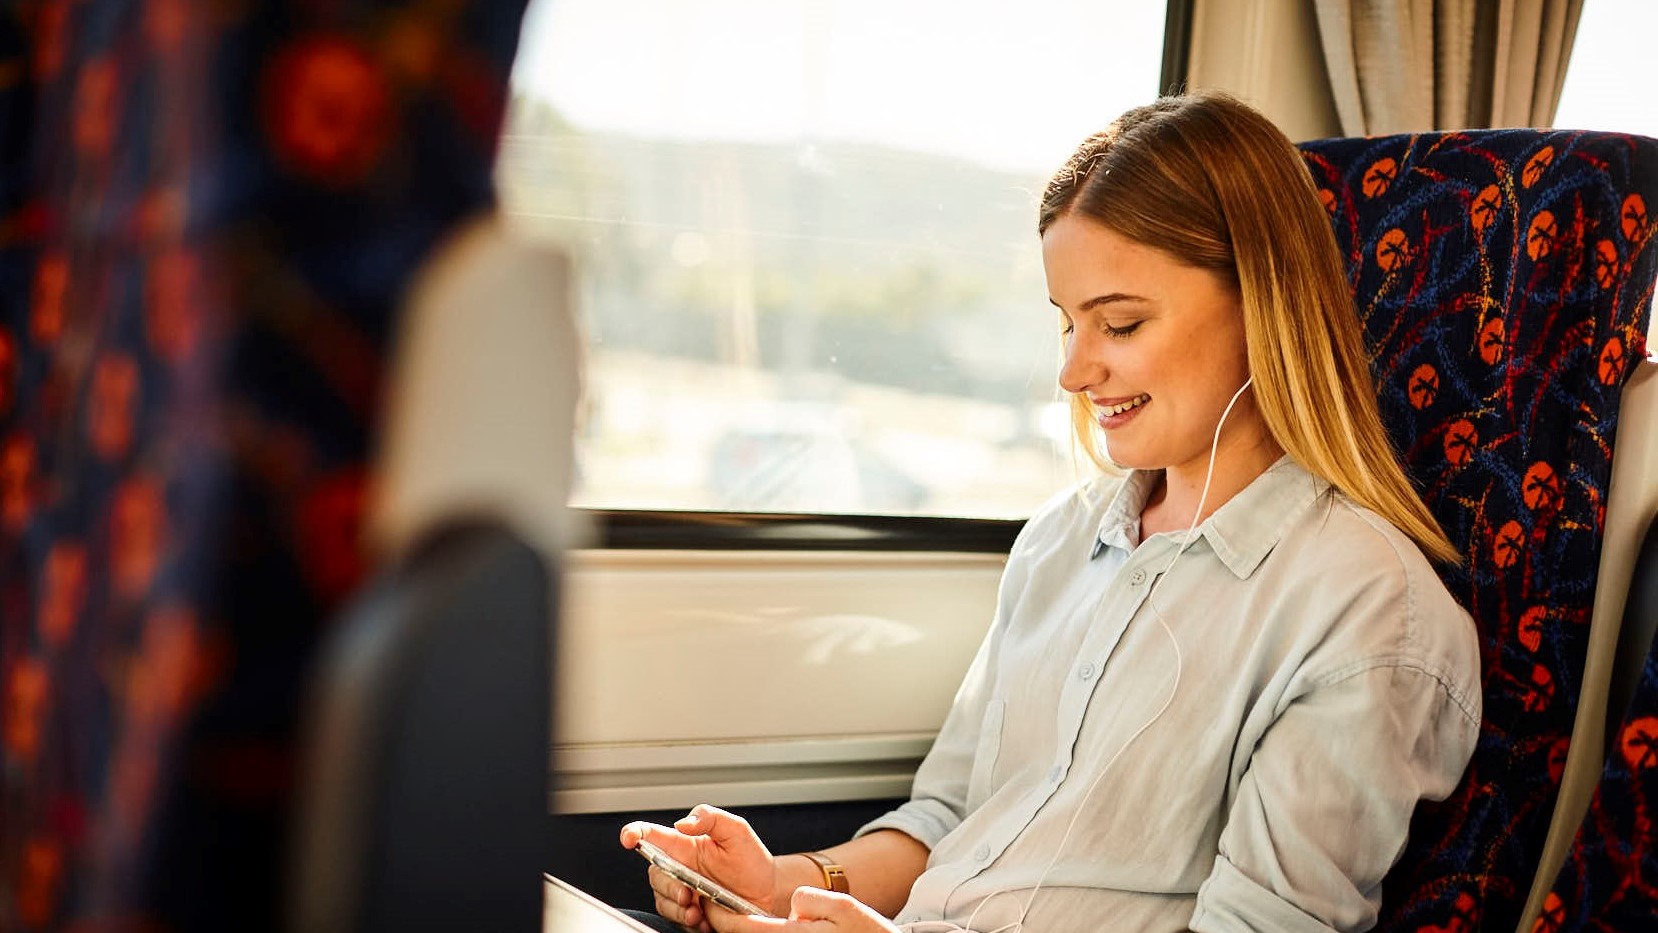 Girl on train wearing headphones